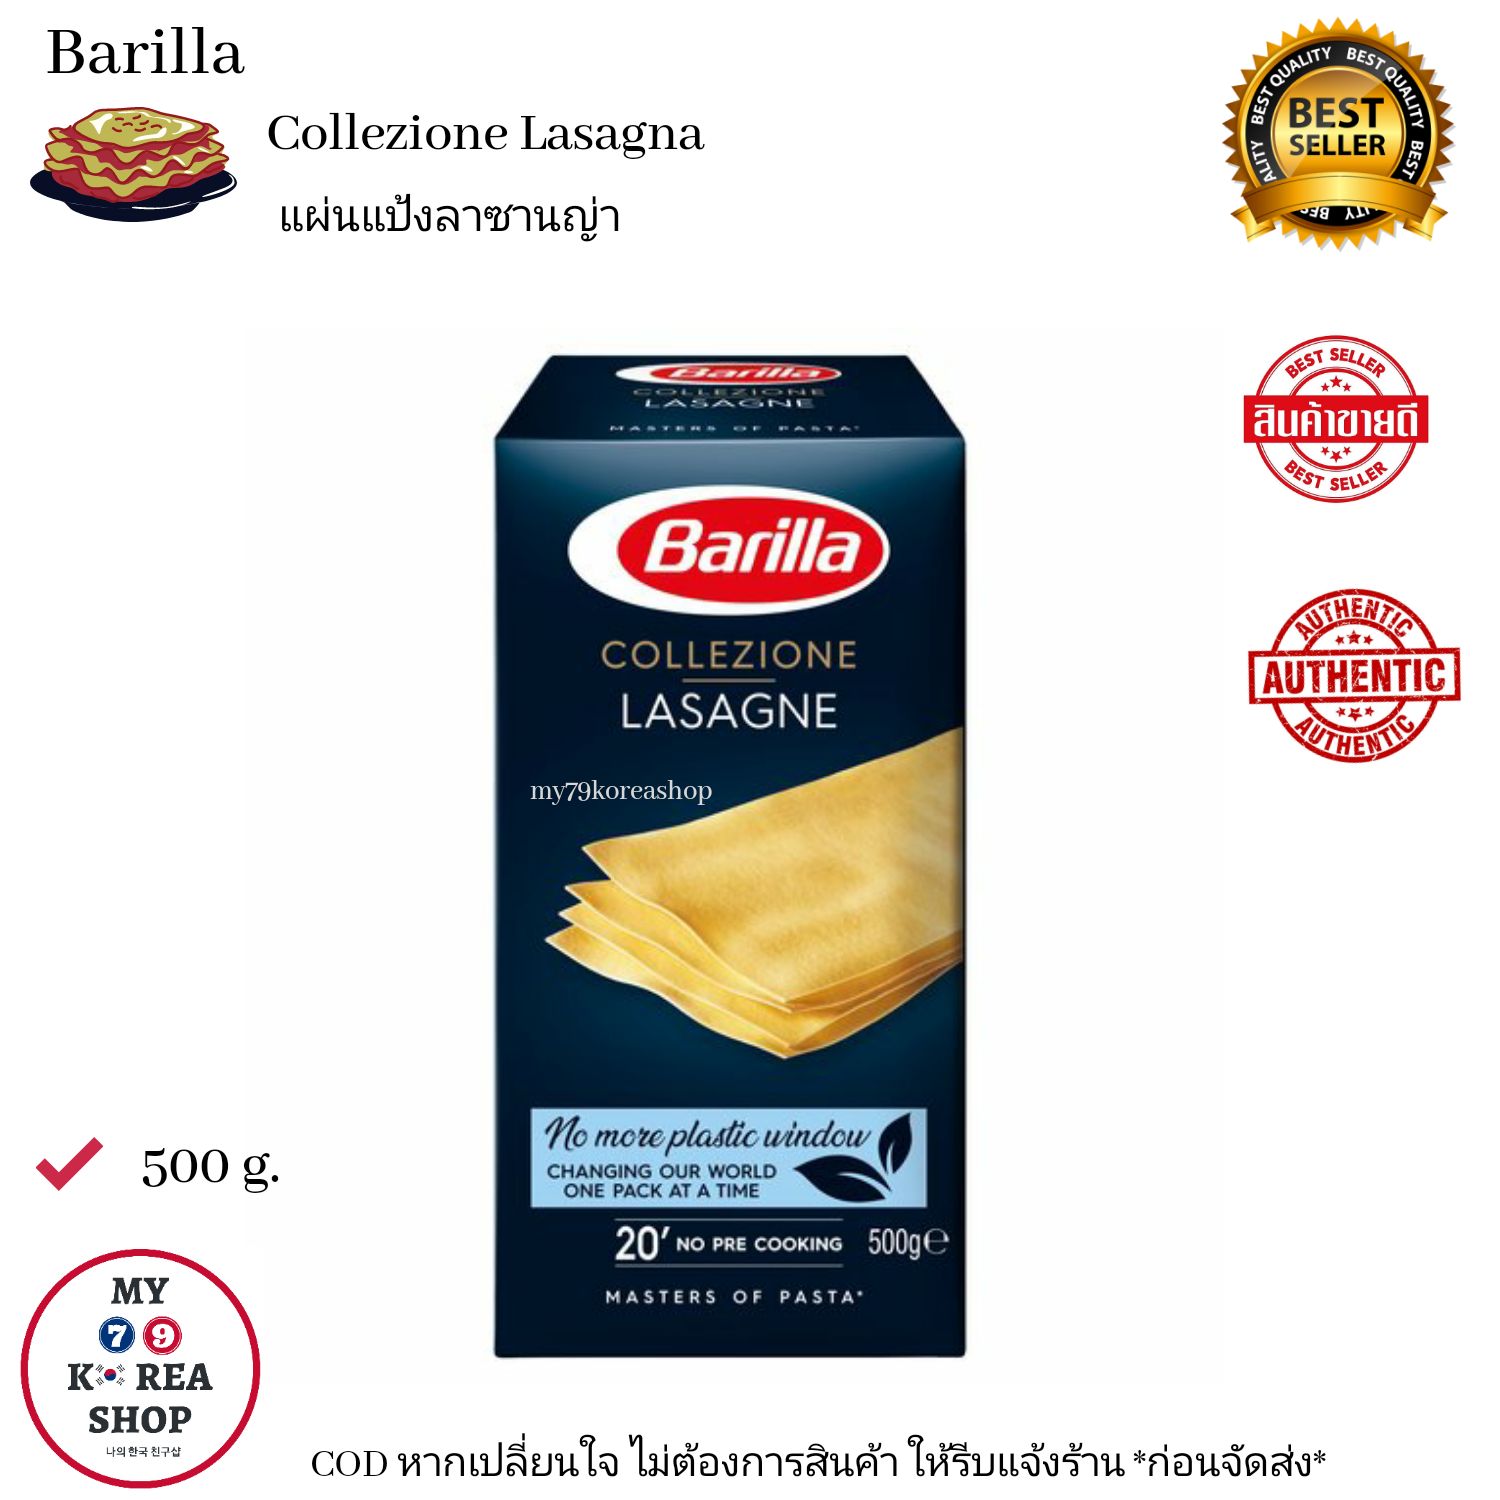 Barilla Collezione Lasagna 500 g. แผ่นแป้งลาซานญ่า / พาสต้า